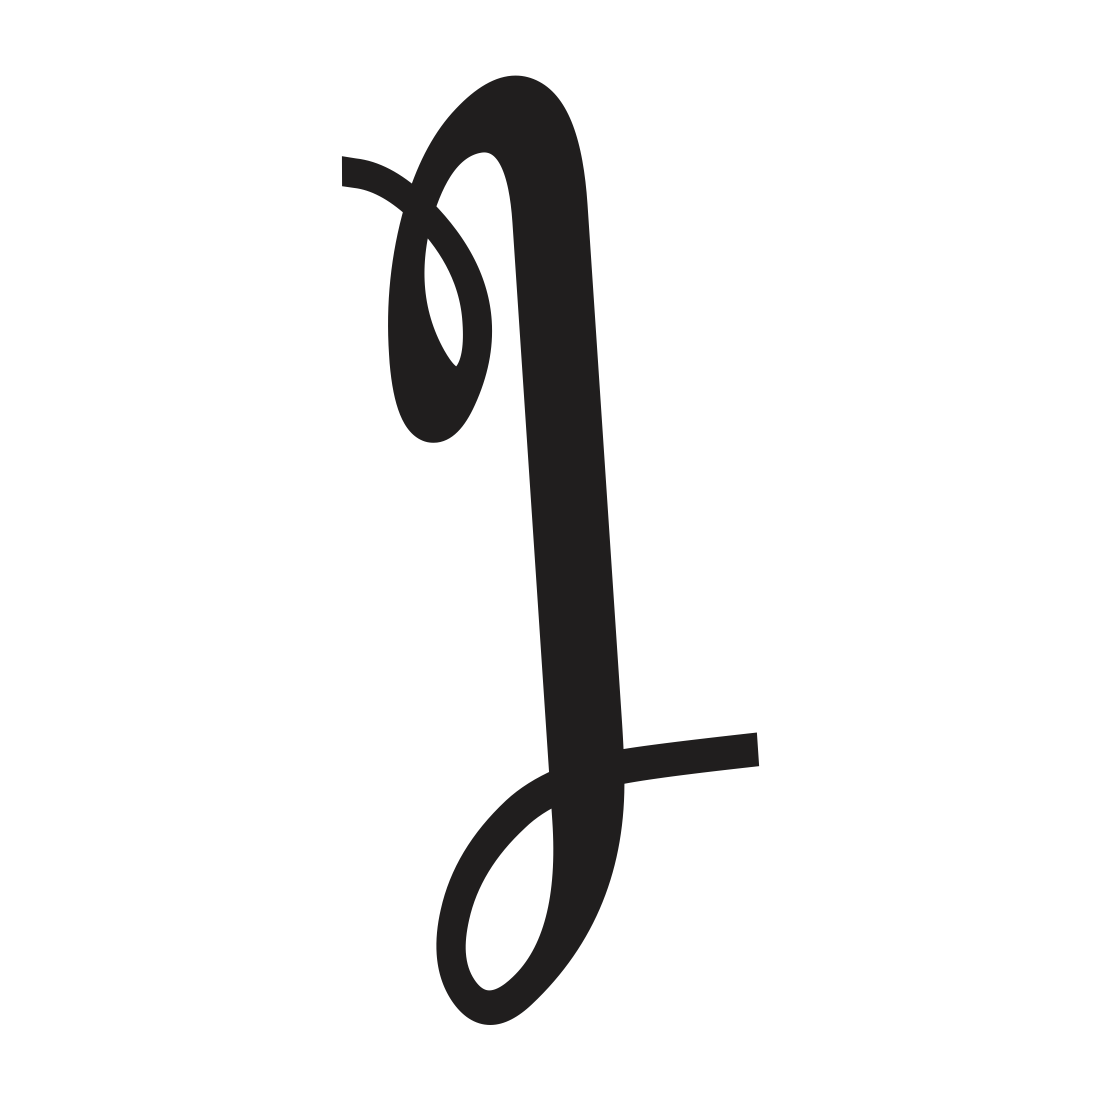 capital letter i in cursive